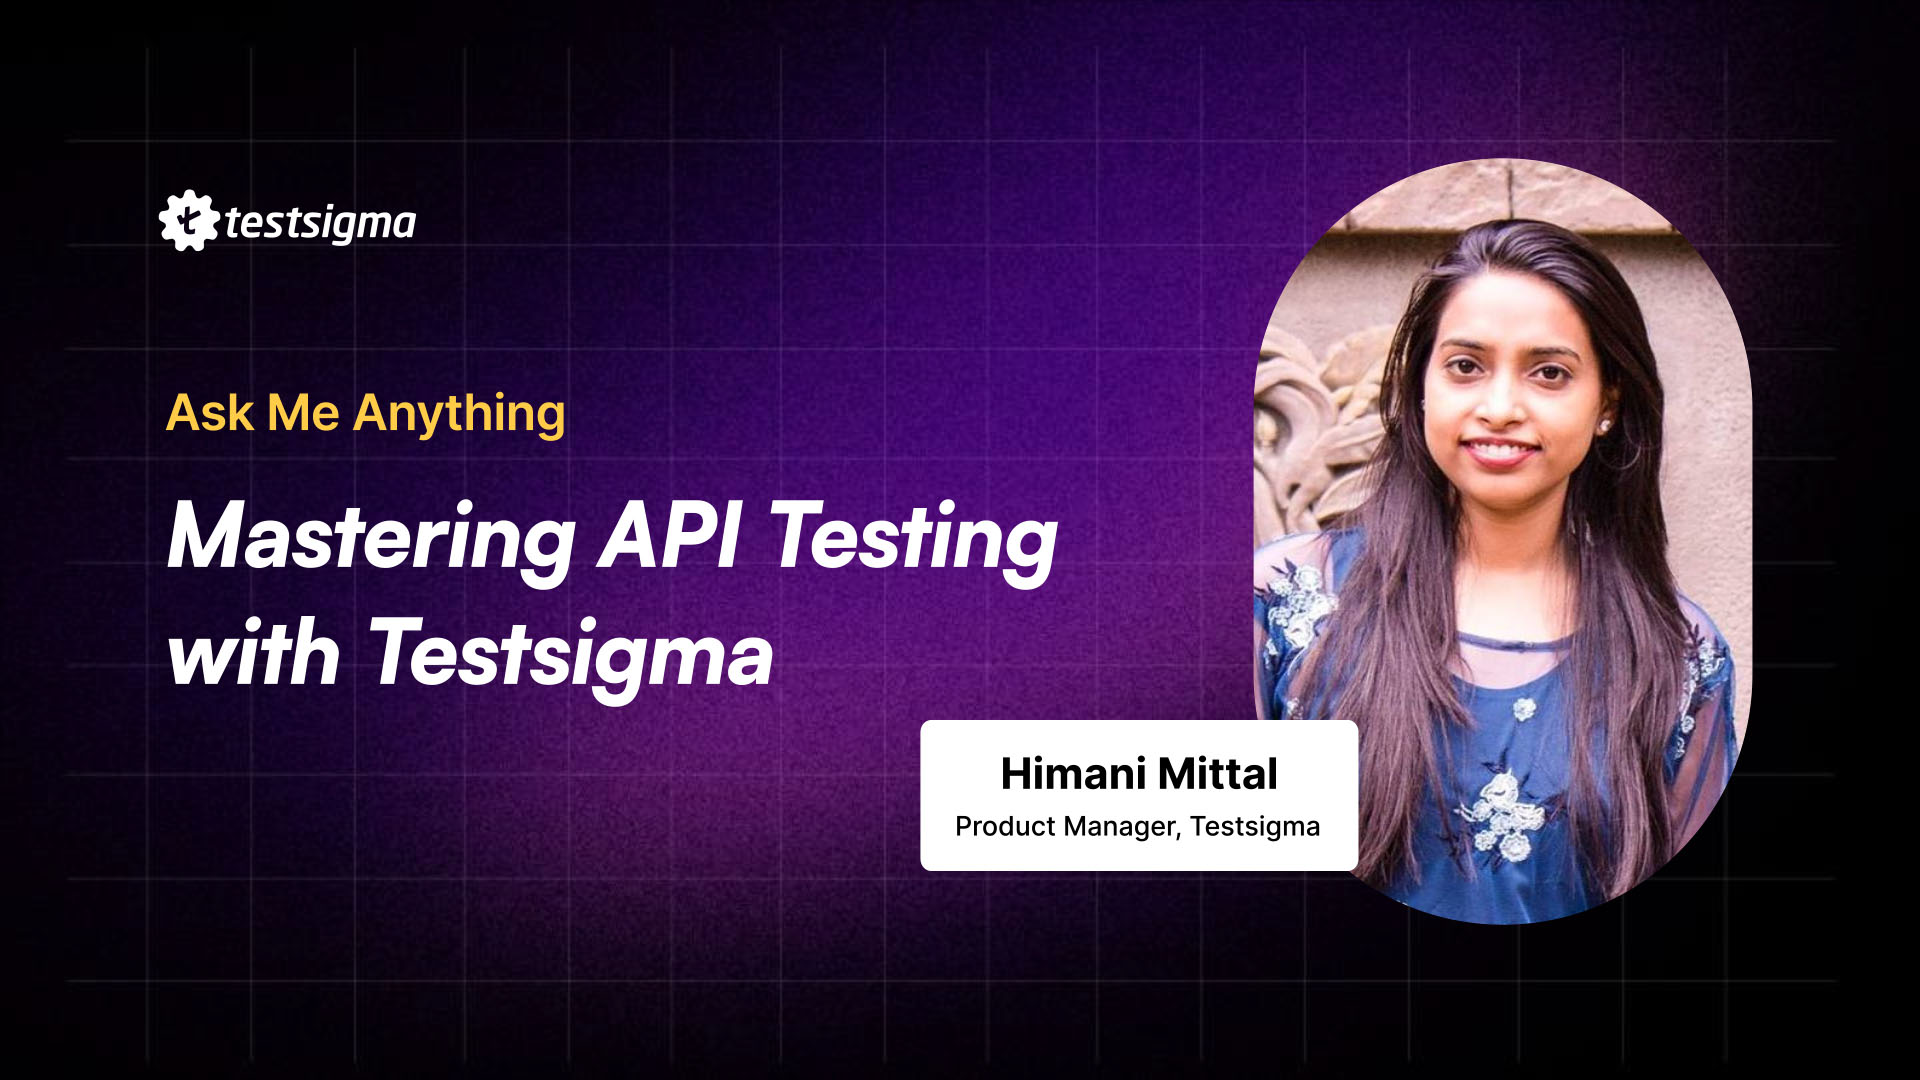  Mastering API Testing